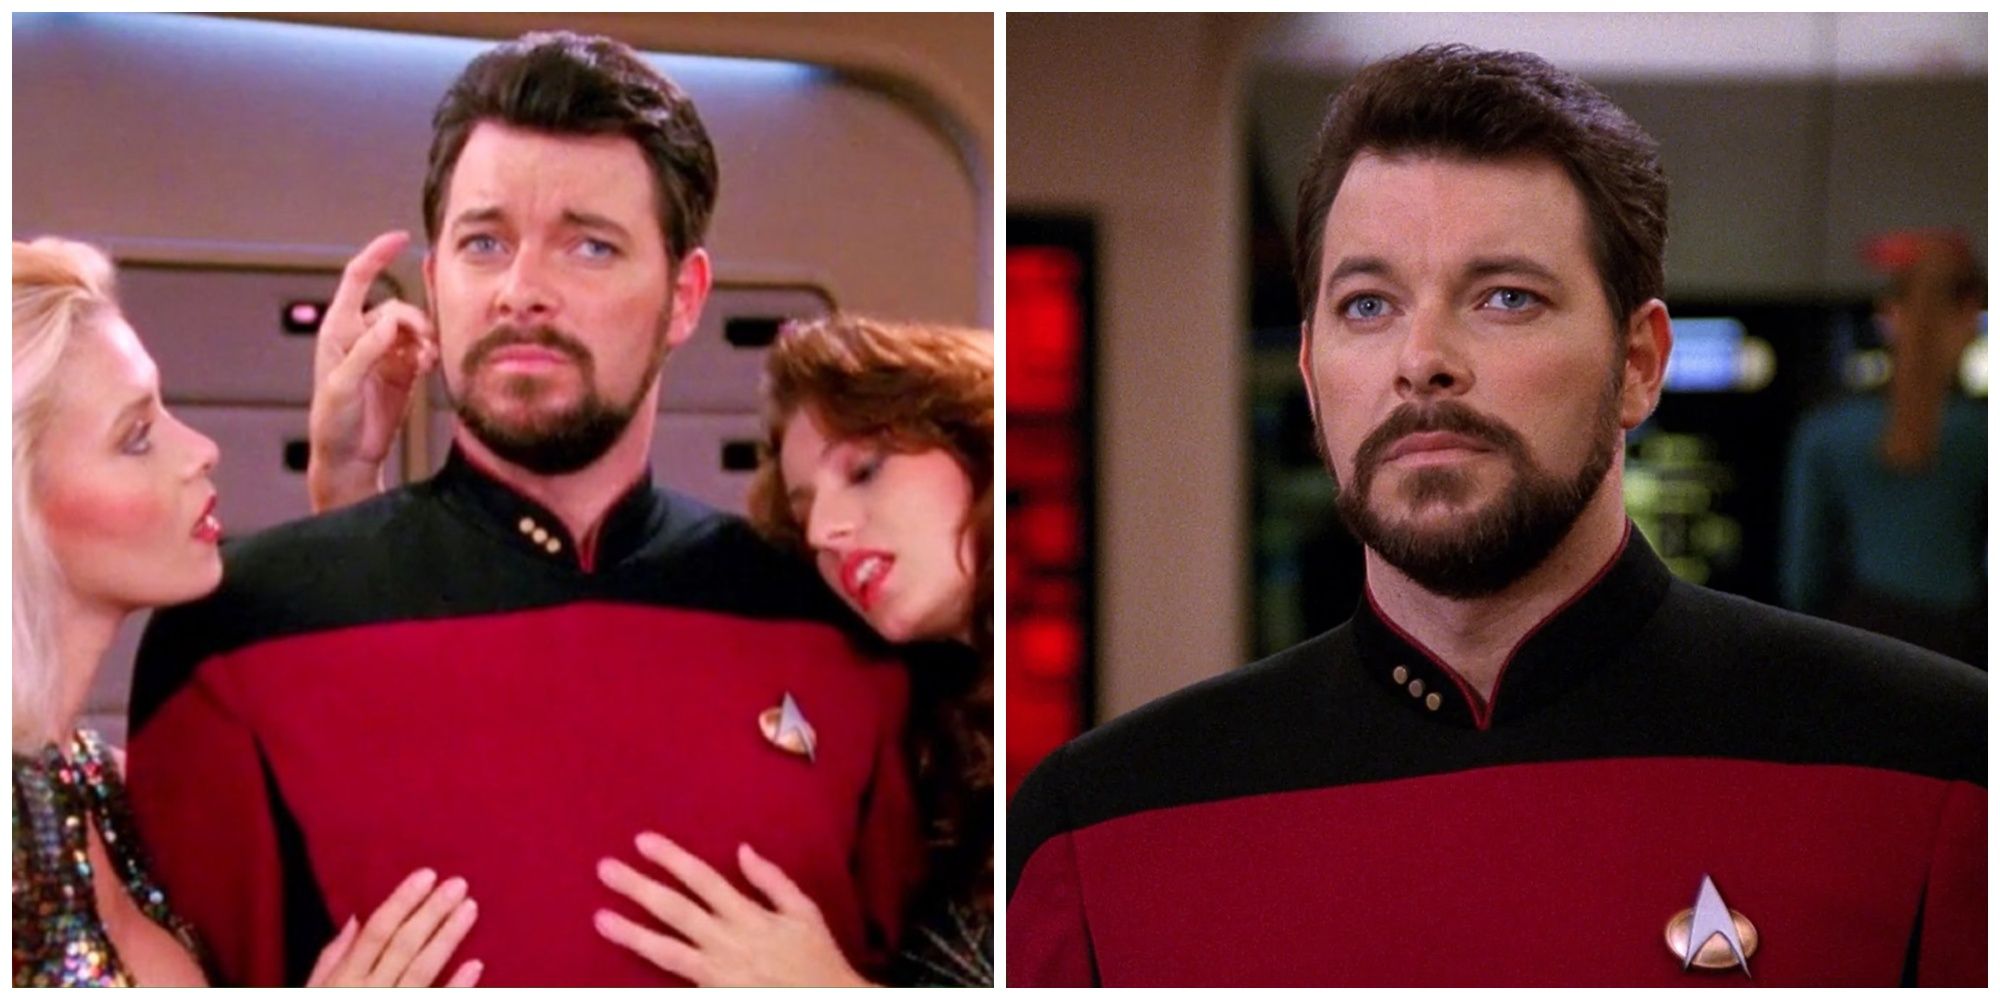 Split image showing Riker in Star Trek: The Next Generation.